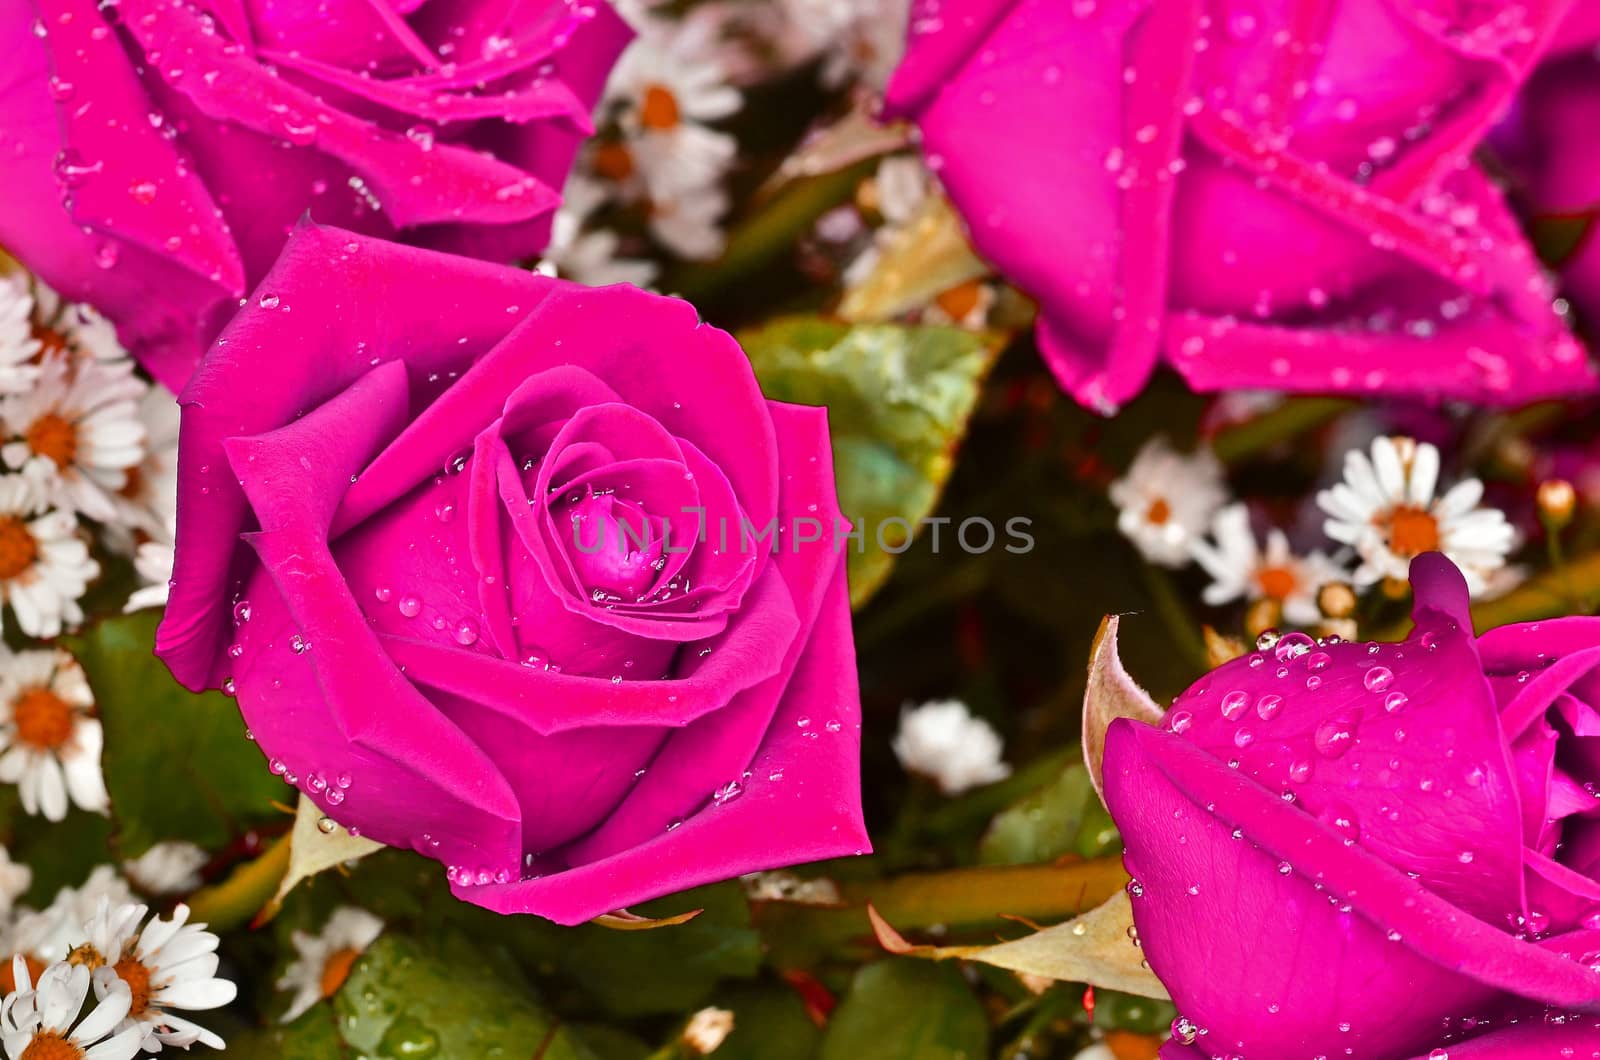 Close-up view of beatiful pink rose